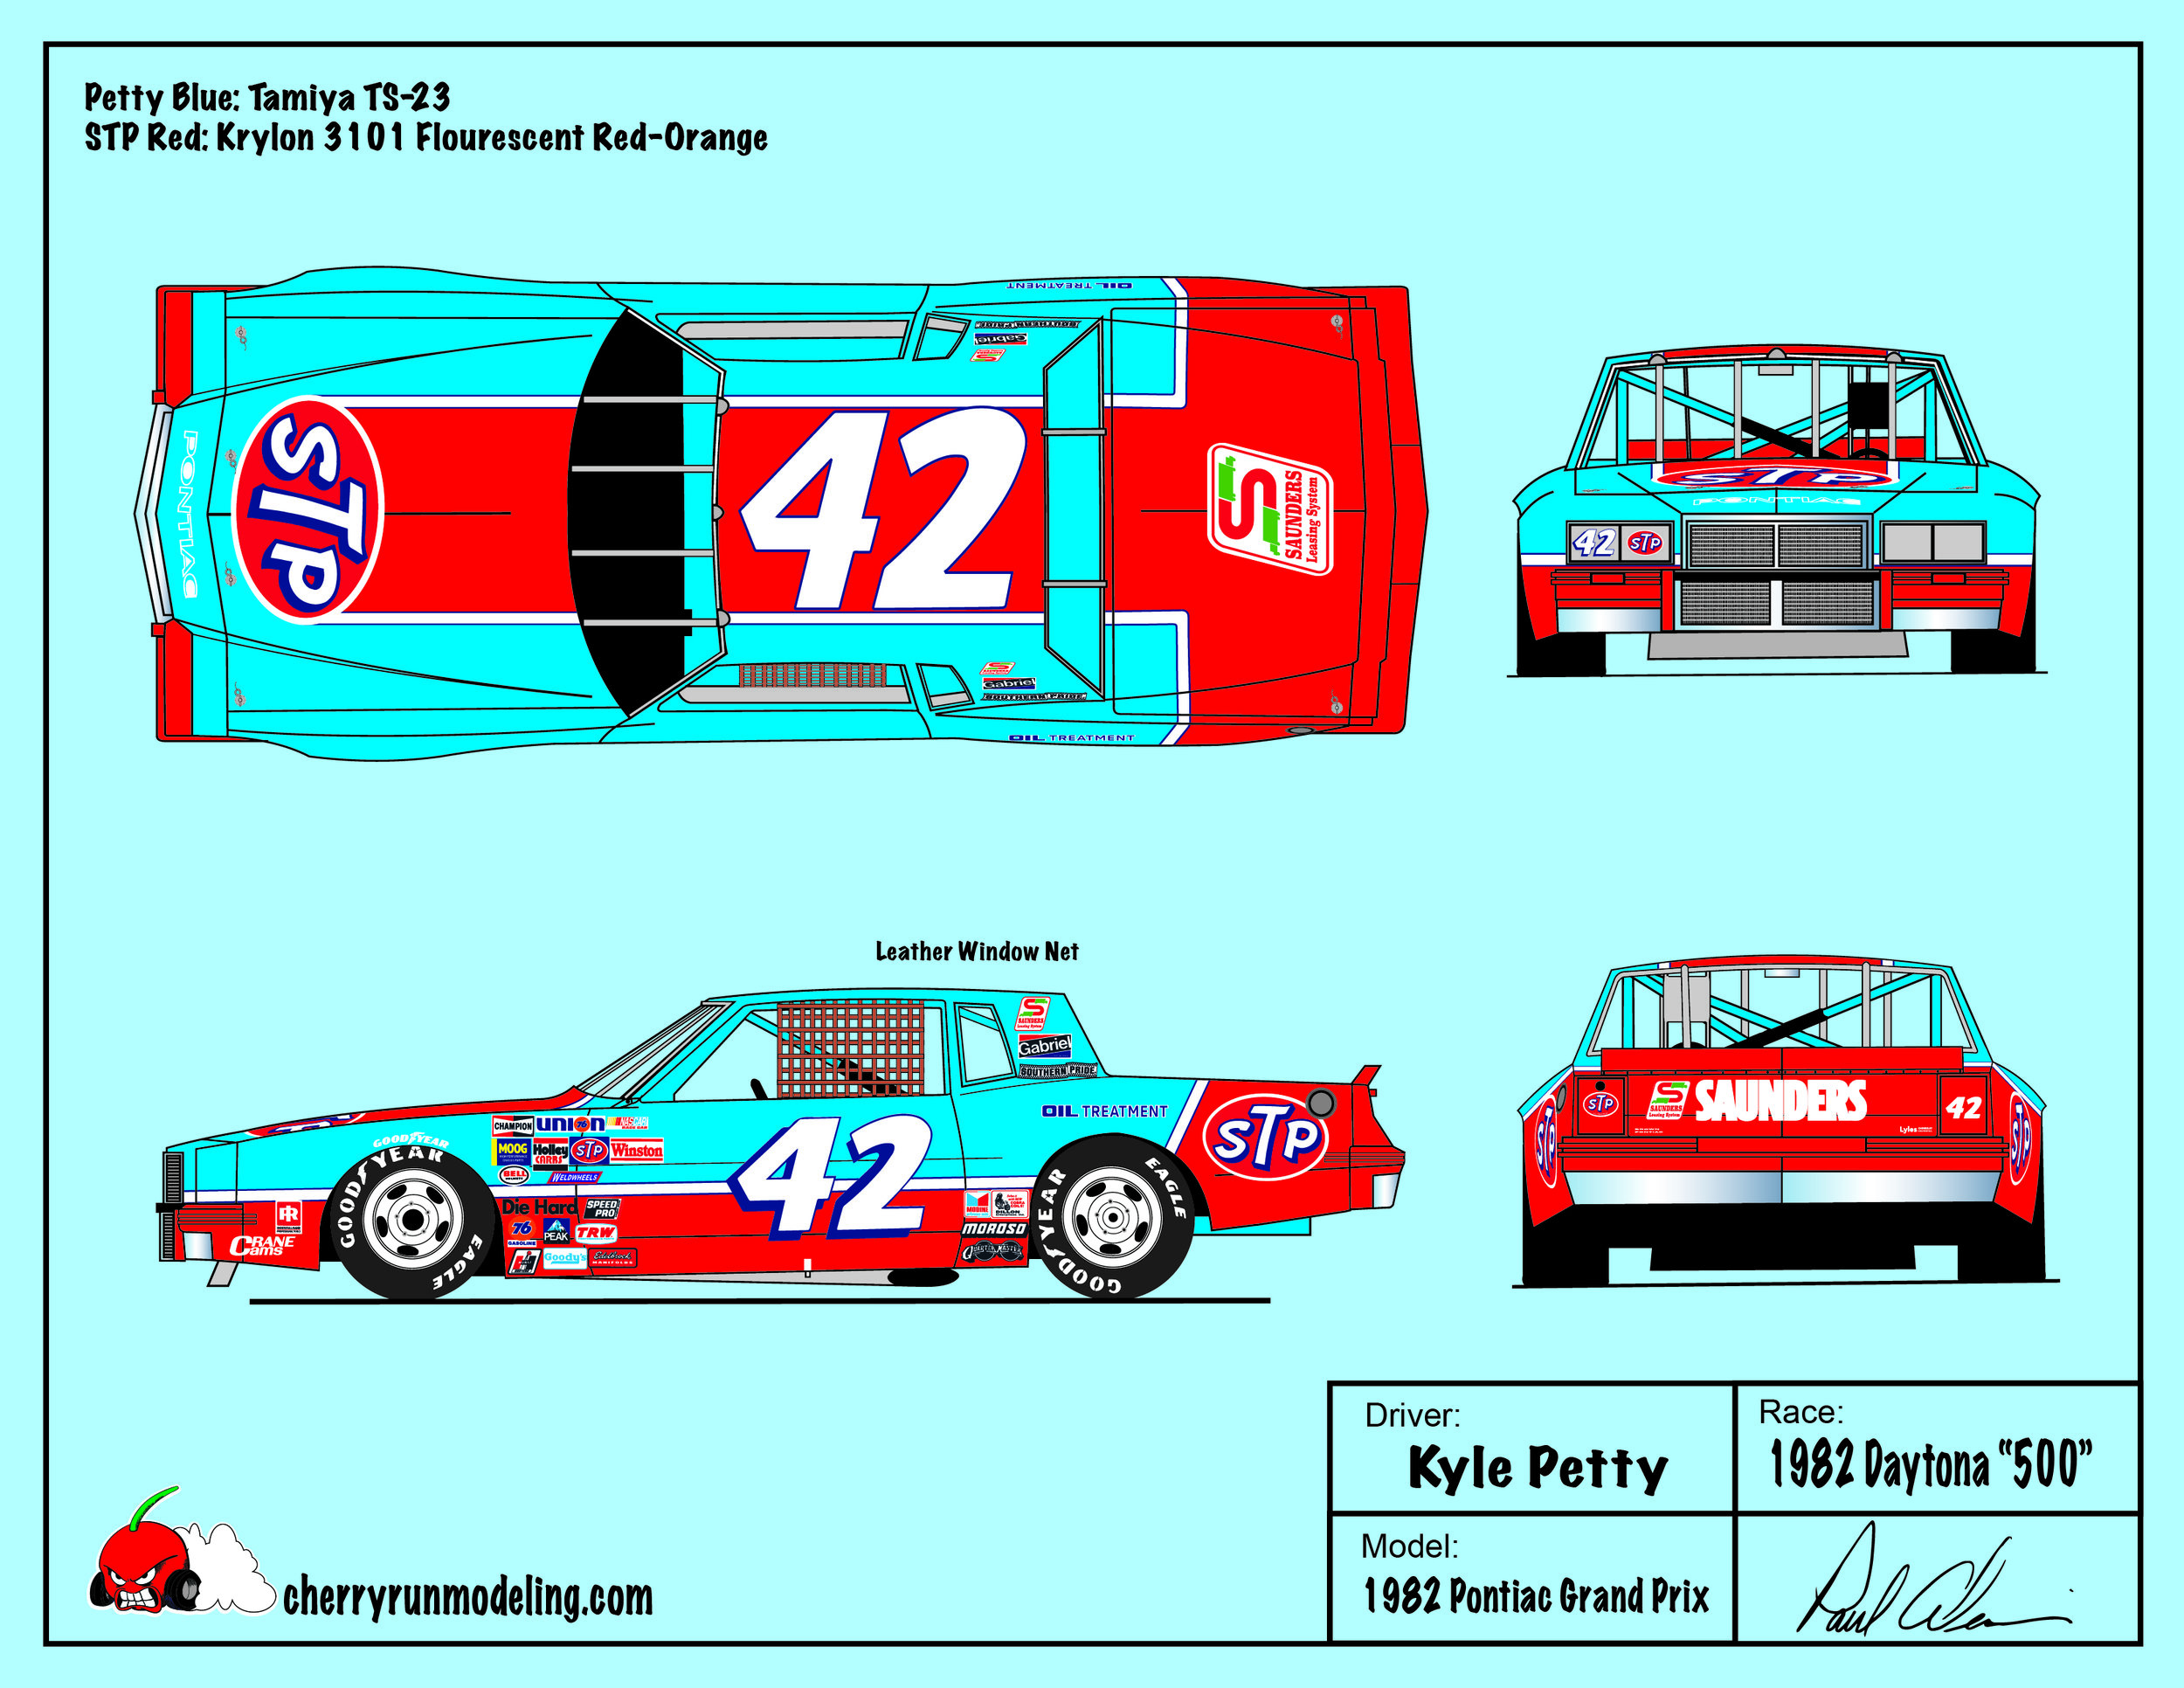 Kyle Petty 1982 Daytona 500.jpg